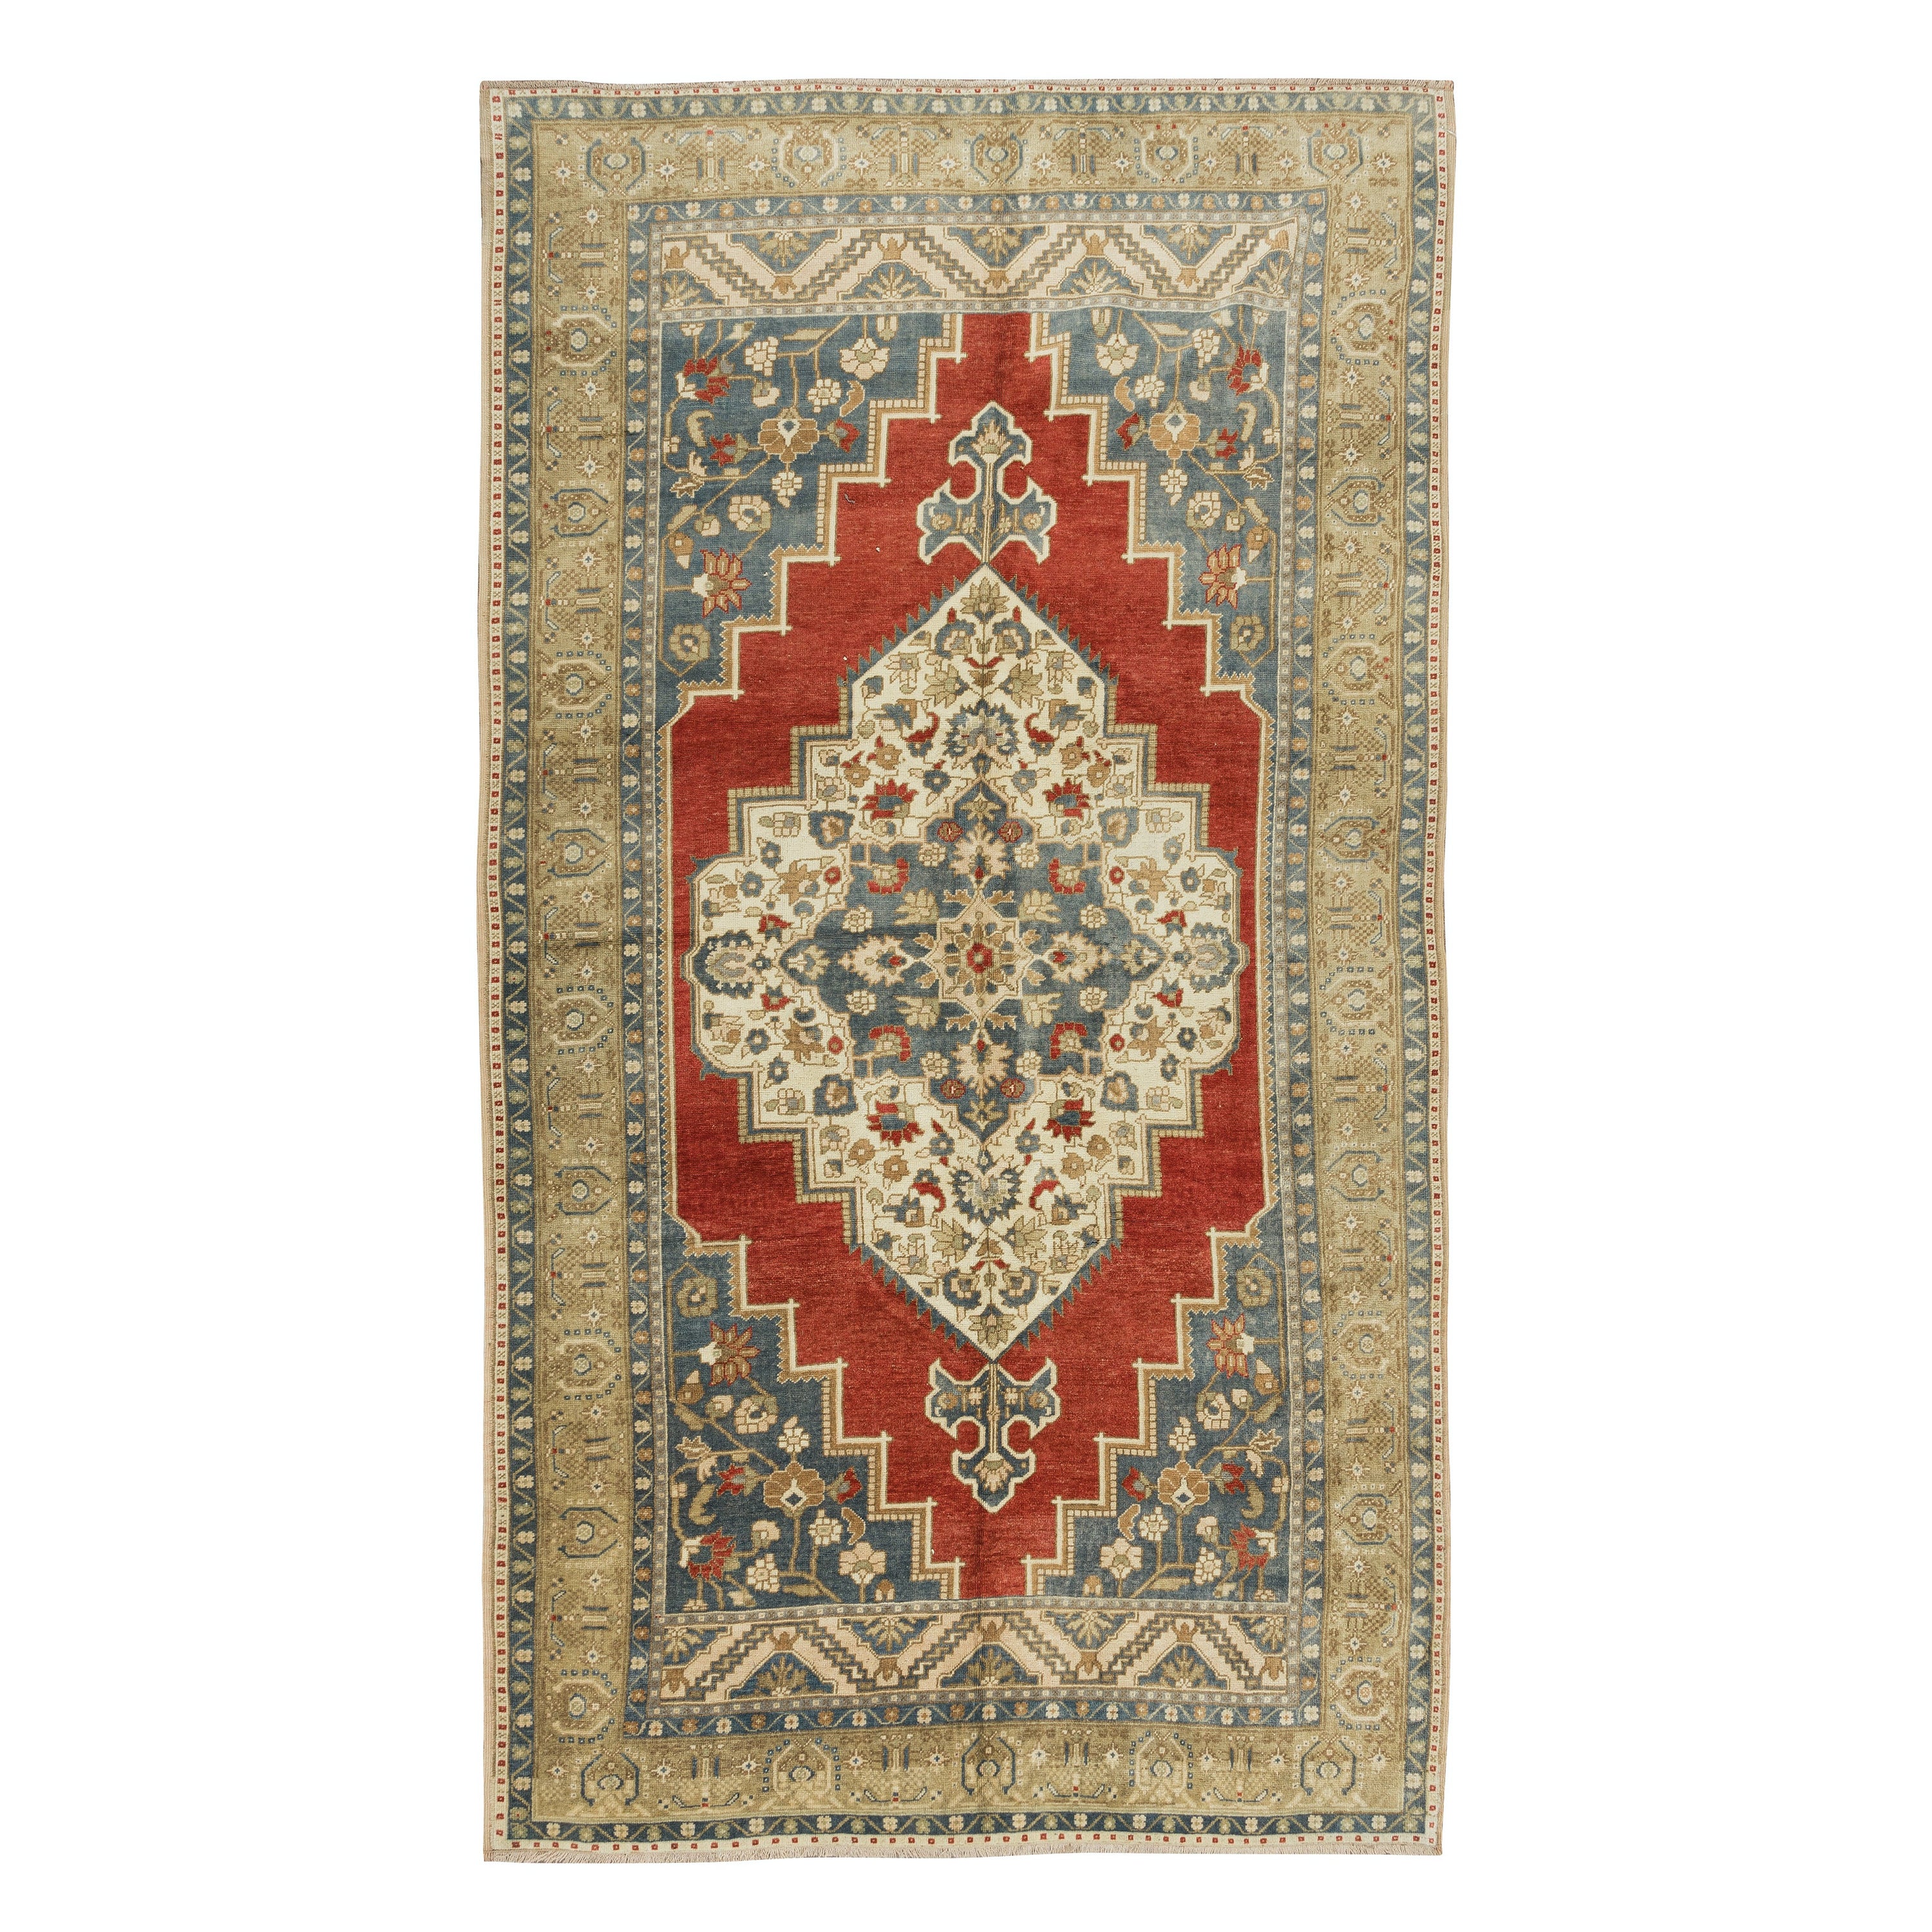 6x11 Ft Vintage Handmade Turkish Tribal Wool Rug, Medallion Design Unique Carpet